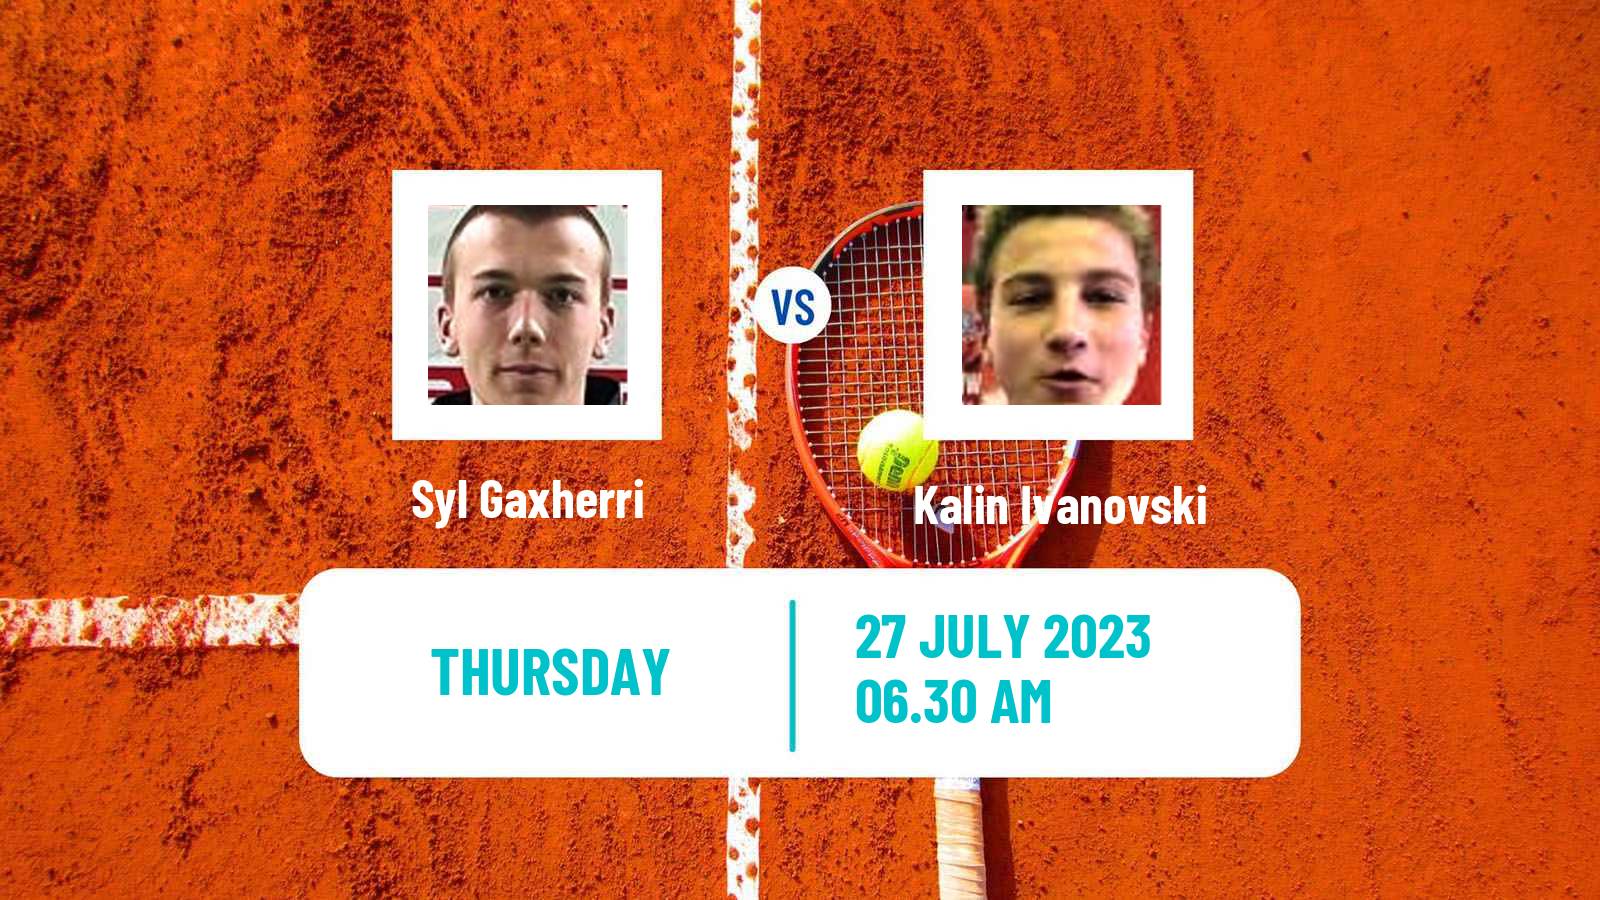 Tennis ITF M25 Kramsach Men Syl Gaxherri - Kalin Ivanovski